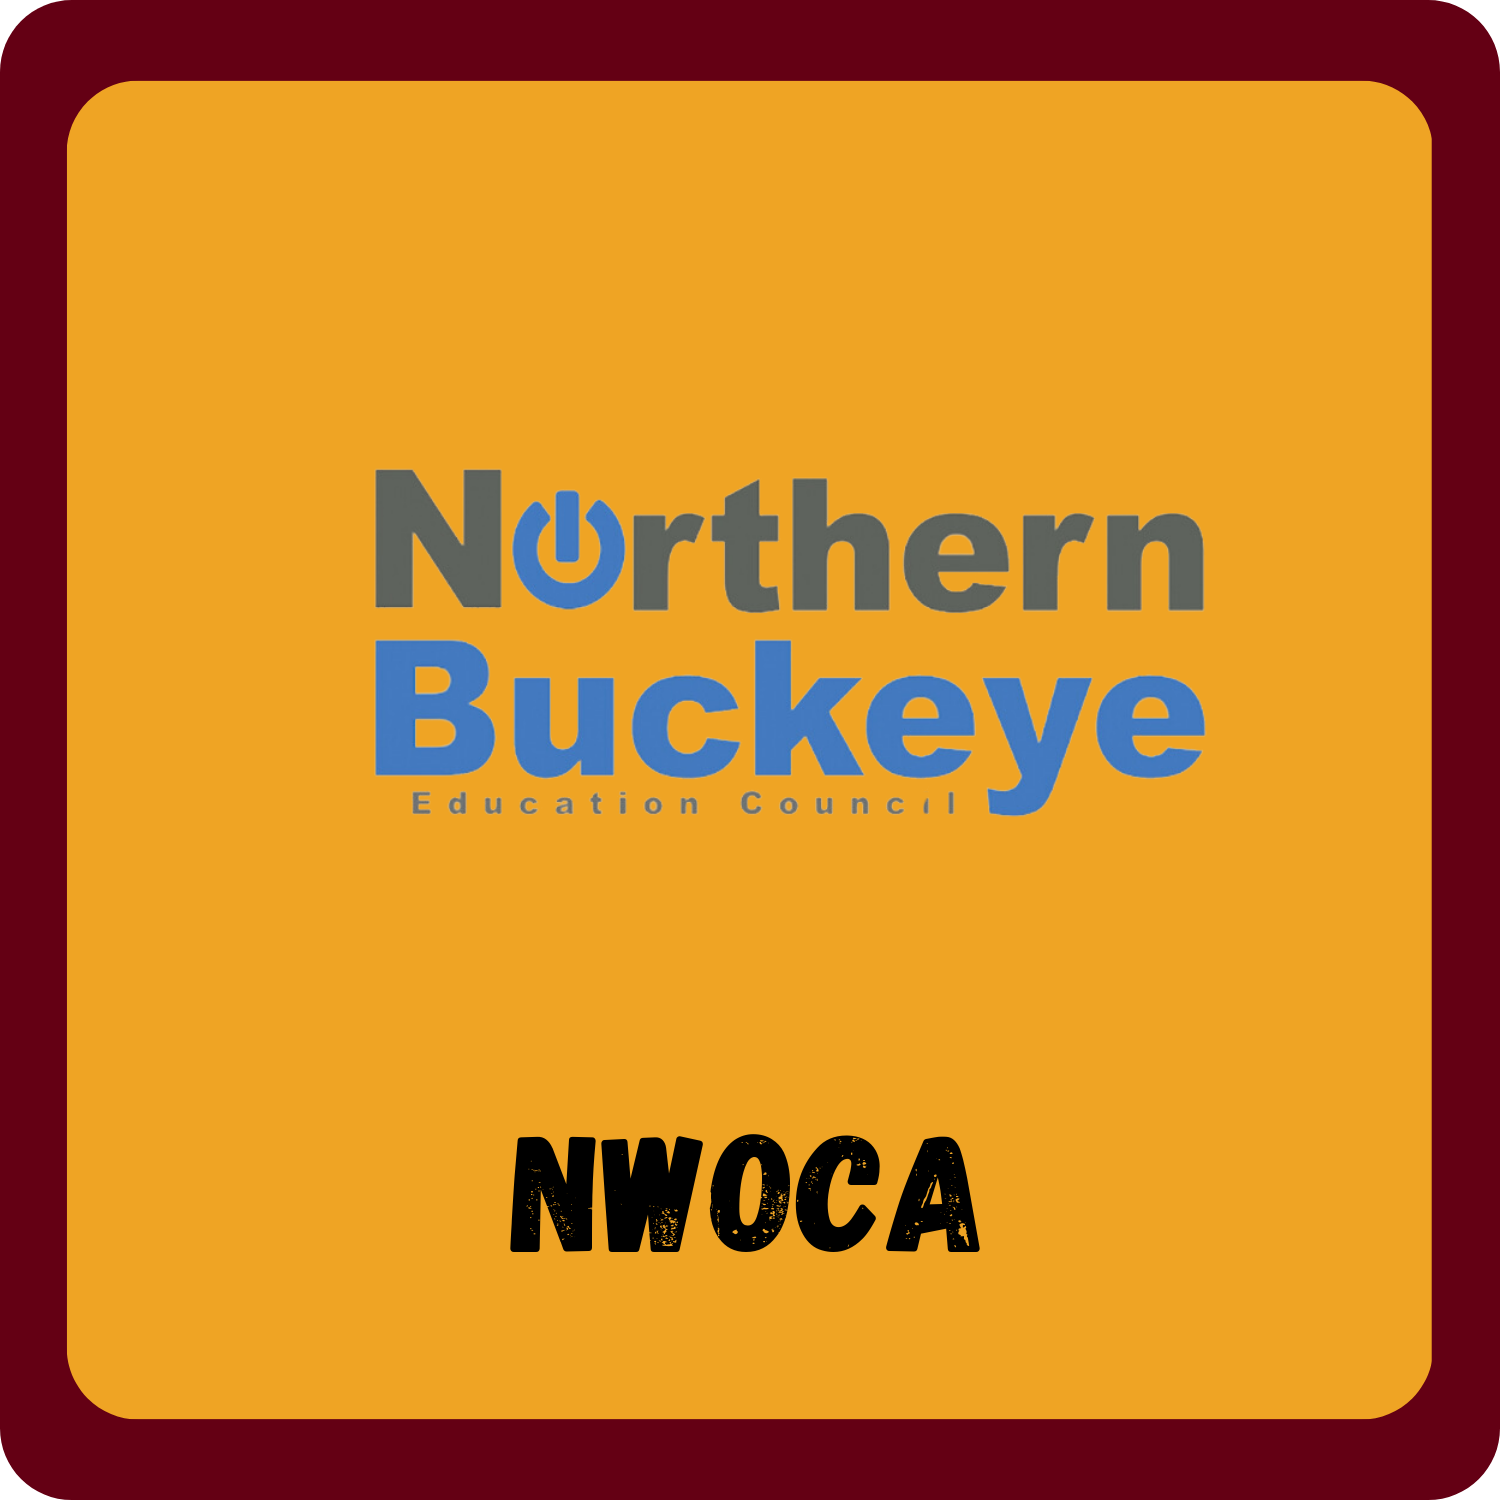 Northern Buckeye Education Council NWOCA